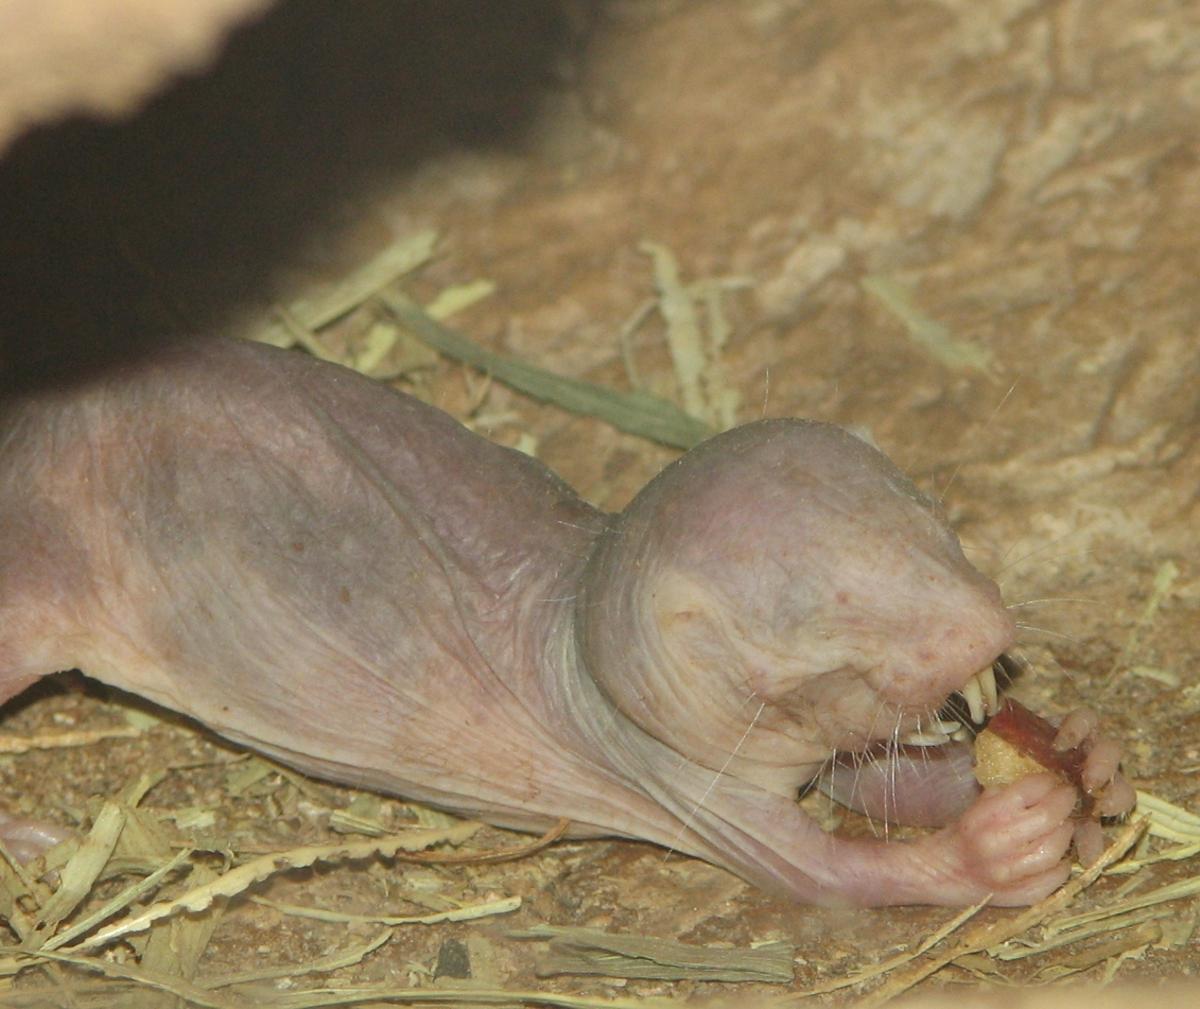 Una rata topo desnuda alimentándose.